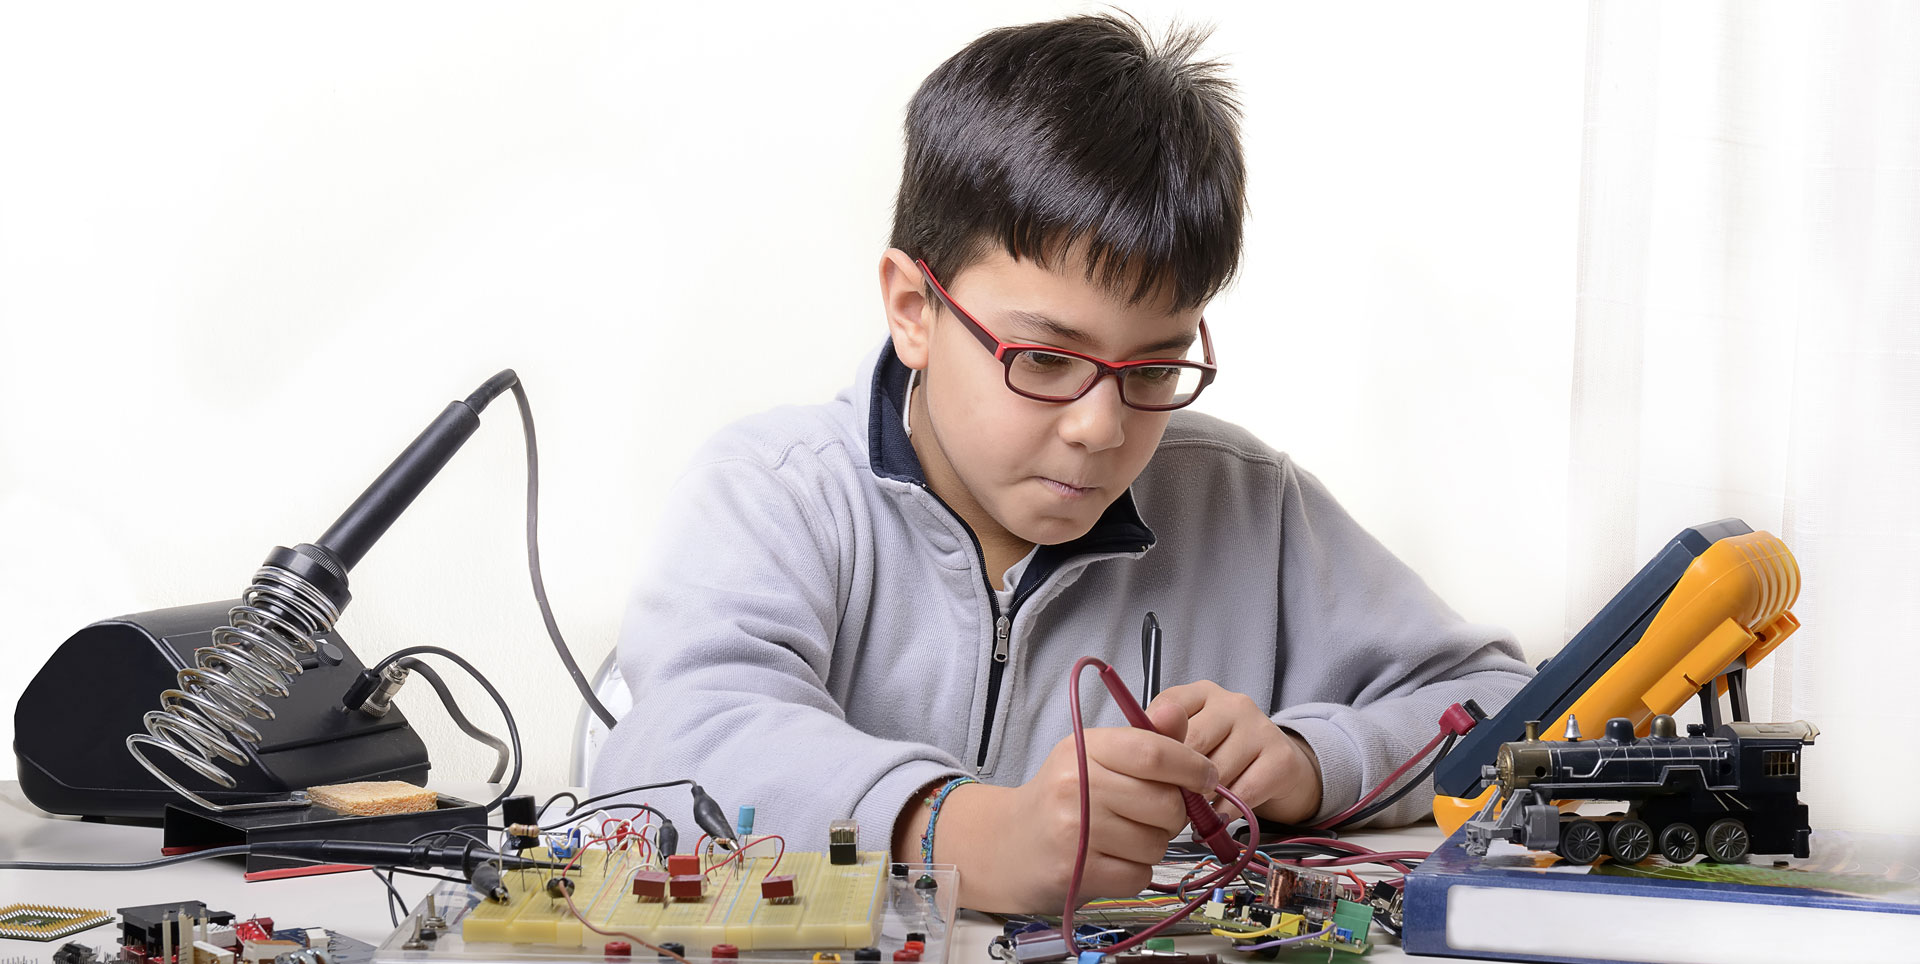 Empowering Kids through Robotics STEM Education